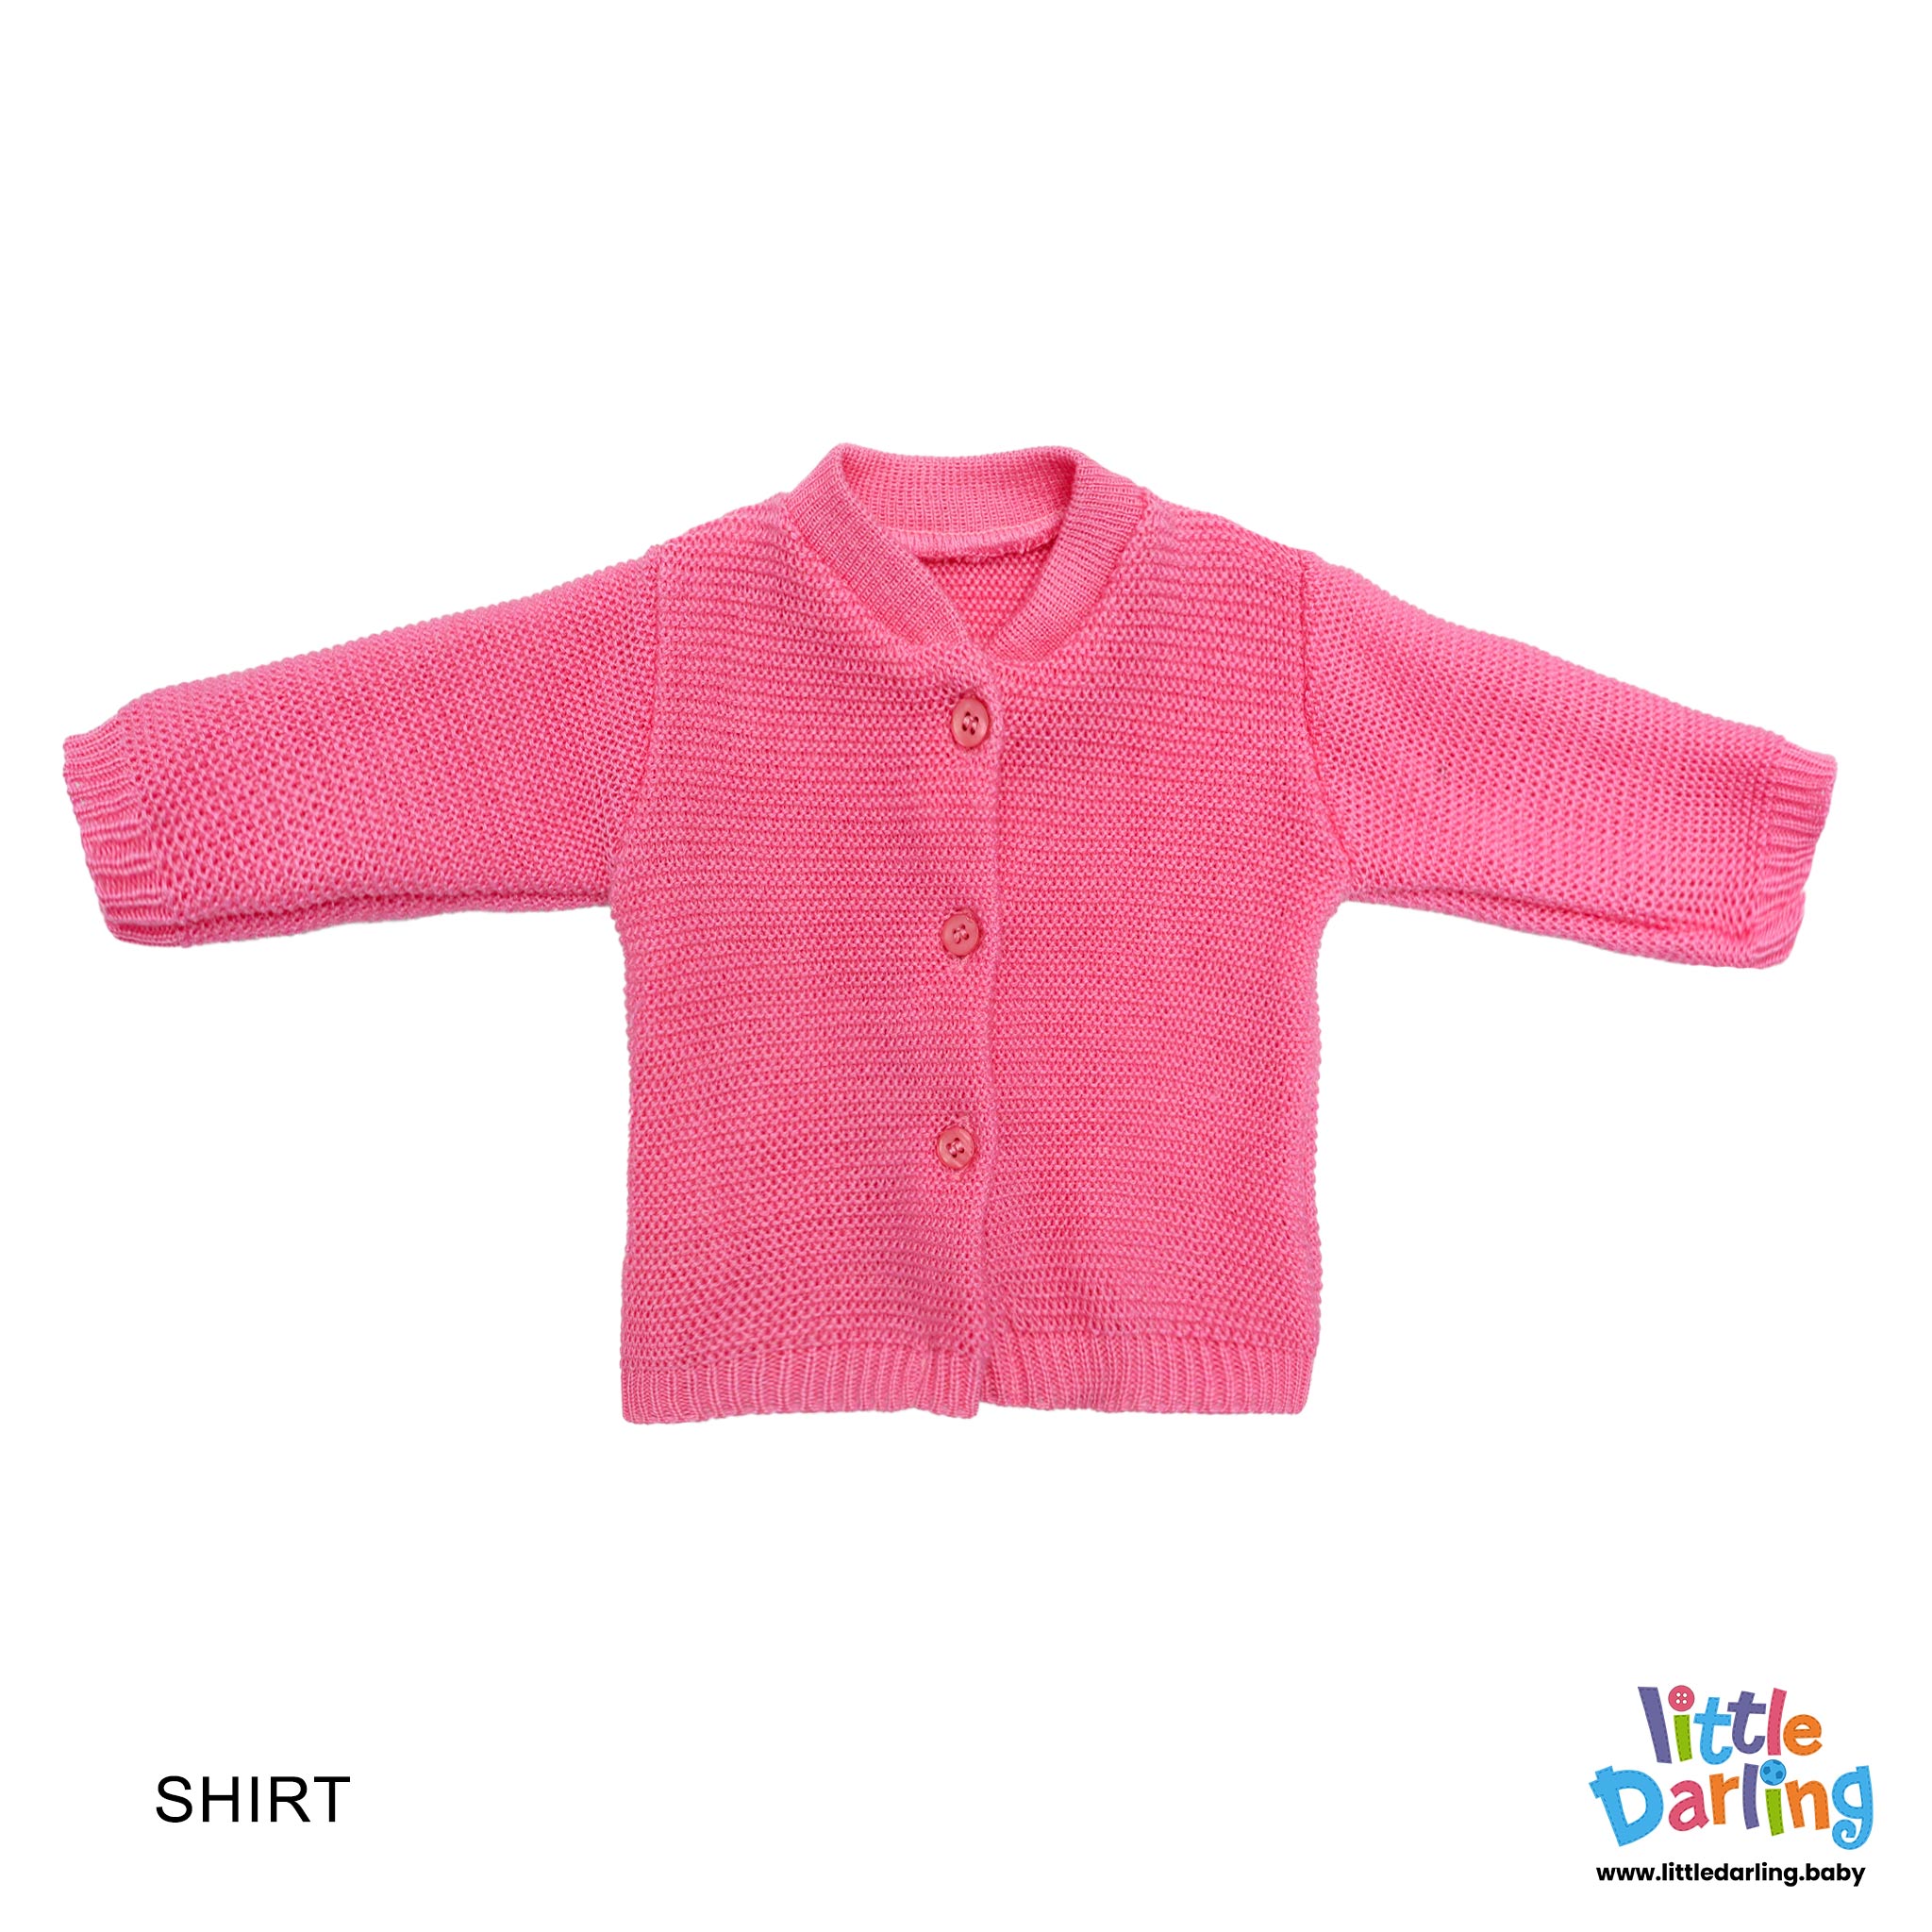 4 Pcs Woolen Gift Set Pink Color by Little Darling